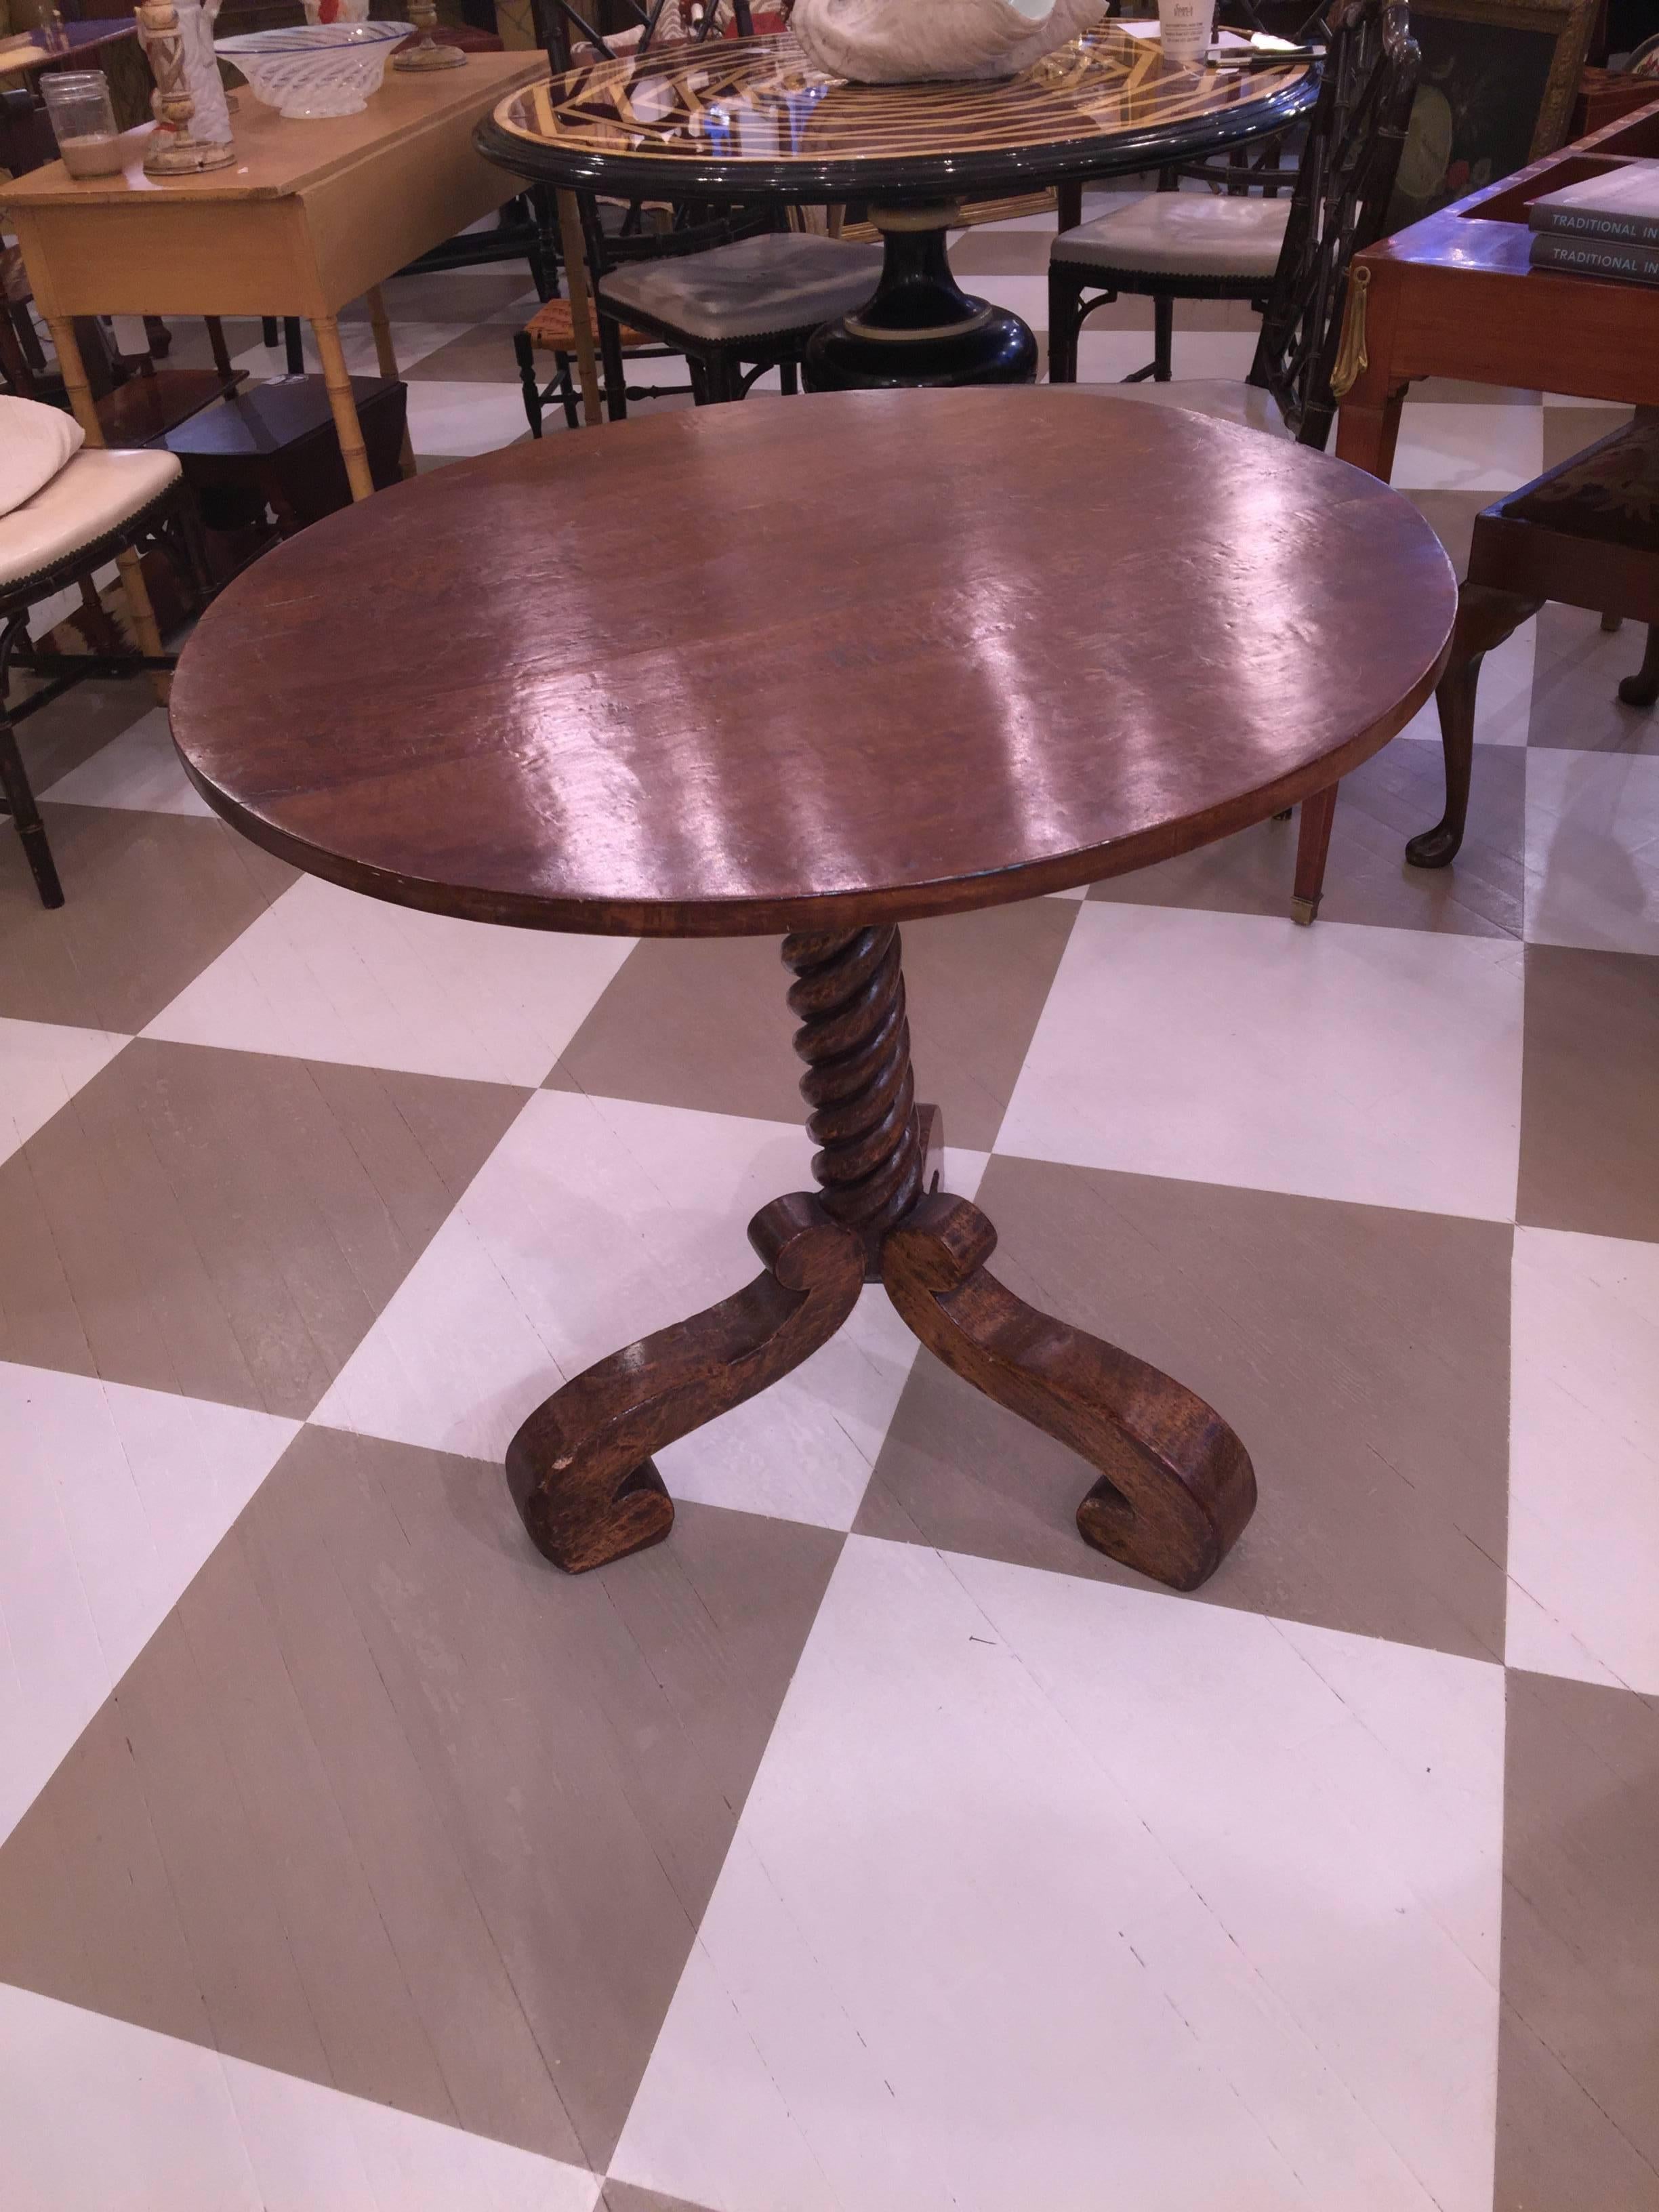 19th century English rope twist pedestal plum pudding mahogany table